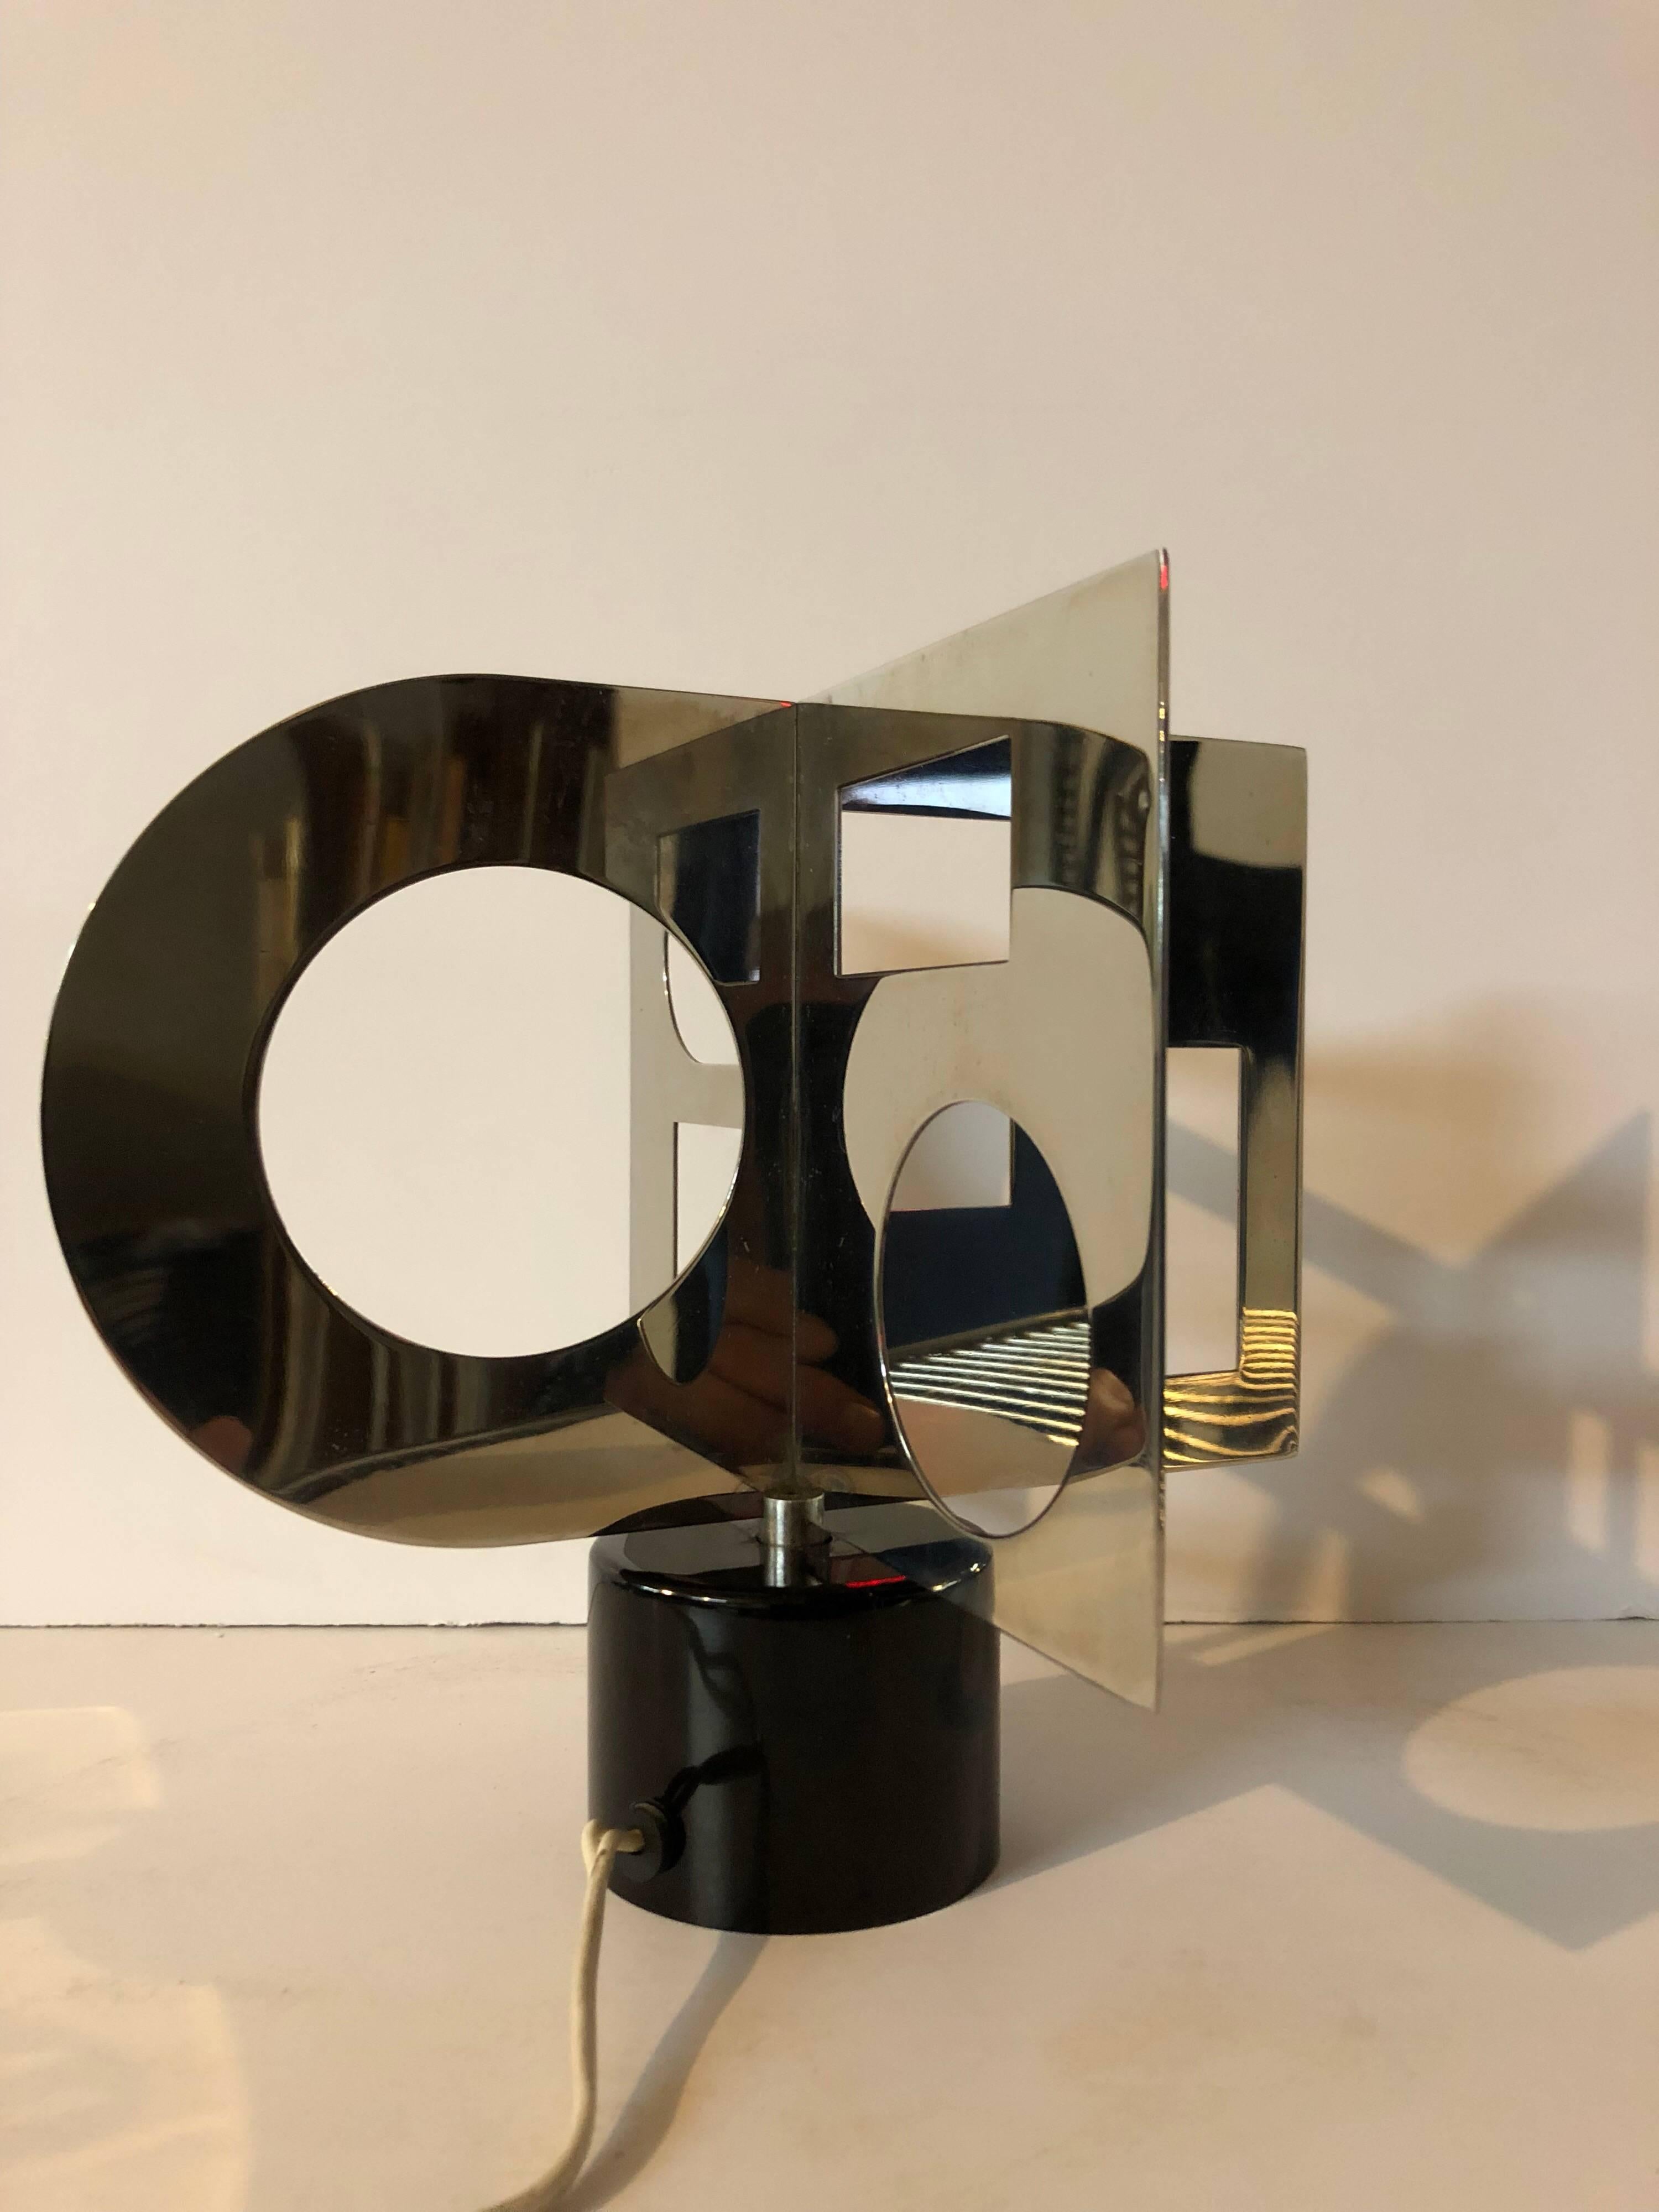 Abstract Sculpture Nicolas Schöffer - Sculpture cinétique motorisée « Minisculpture » Op Art Denise Rene Galerie Paris